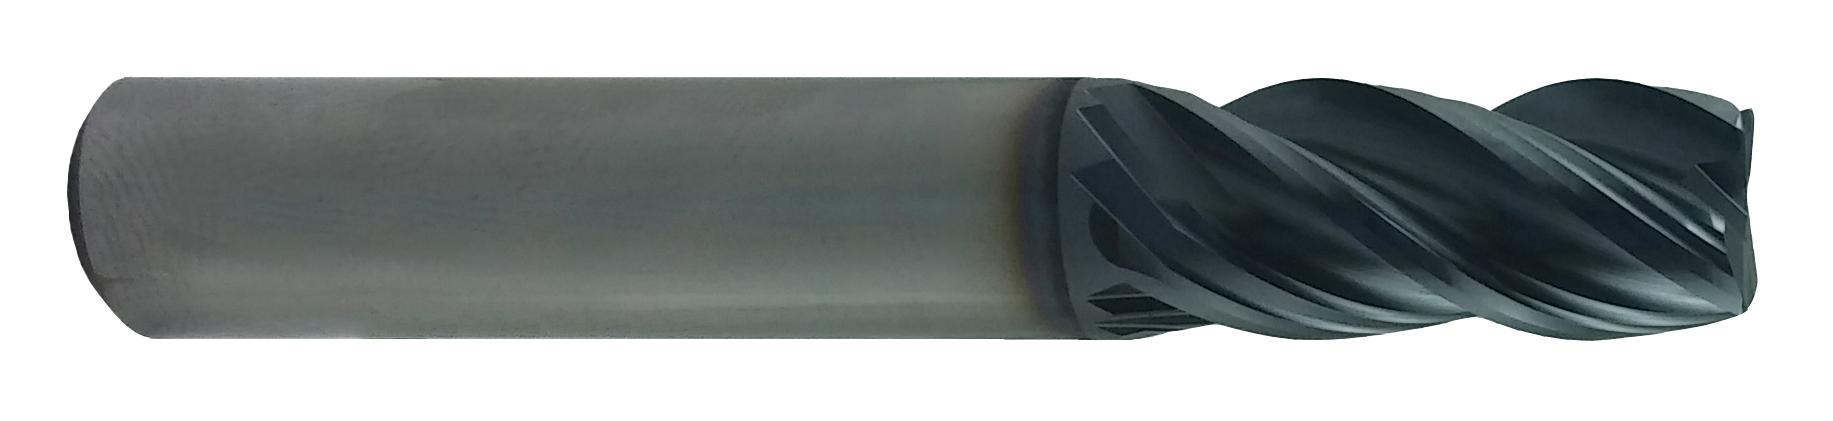 1/4 Cutting Diameter SGS 31570 15B 2 Flute Double End Ball End General Purpose End Mill Titanium Nitride Coating 1/4 Shank Diameter 1/2 Cutting Length 2-1/2 Length 